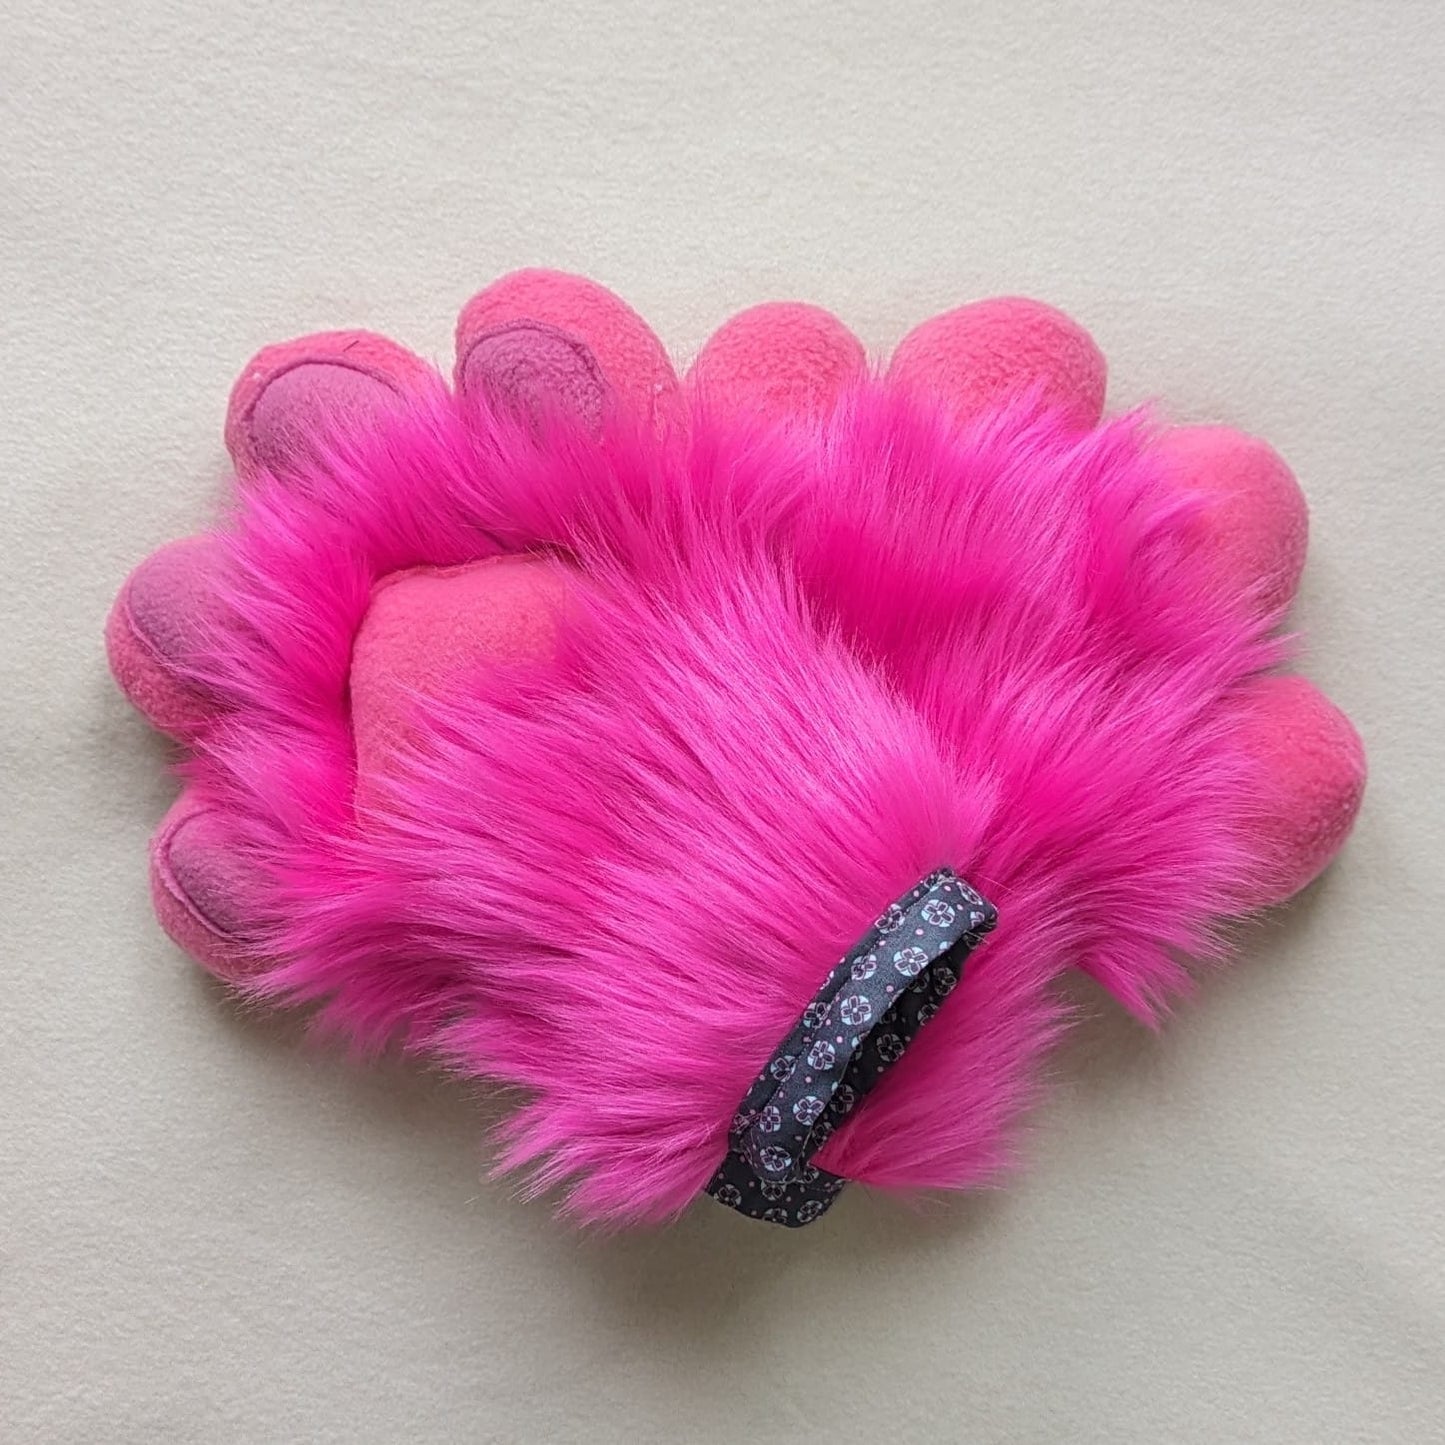 Hand Paws "Royal pink"